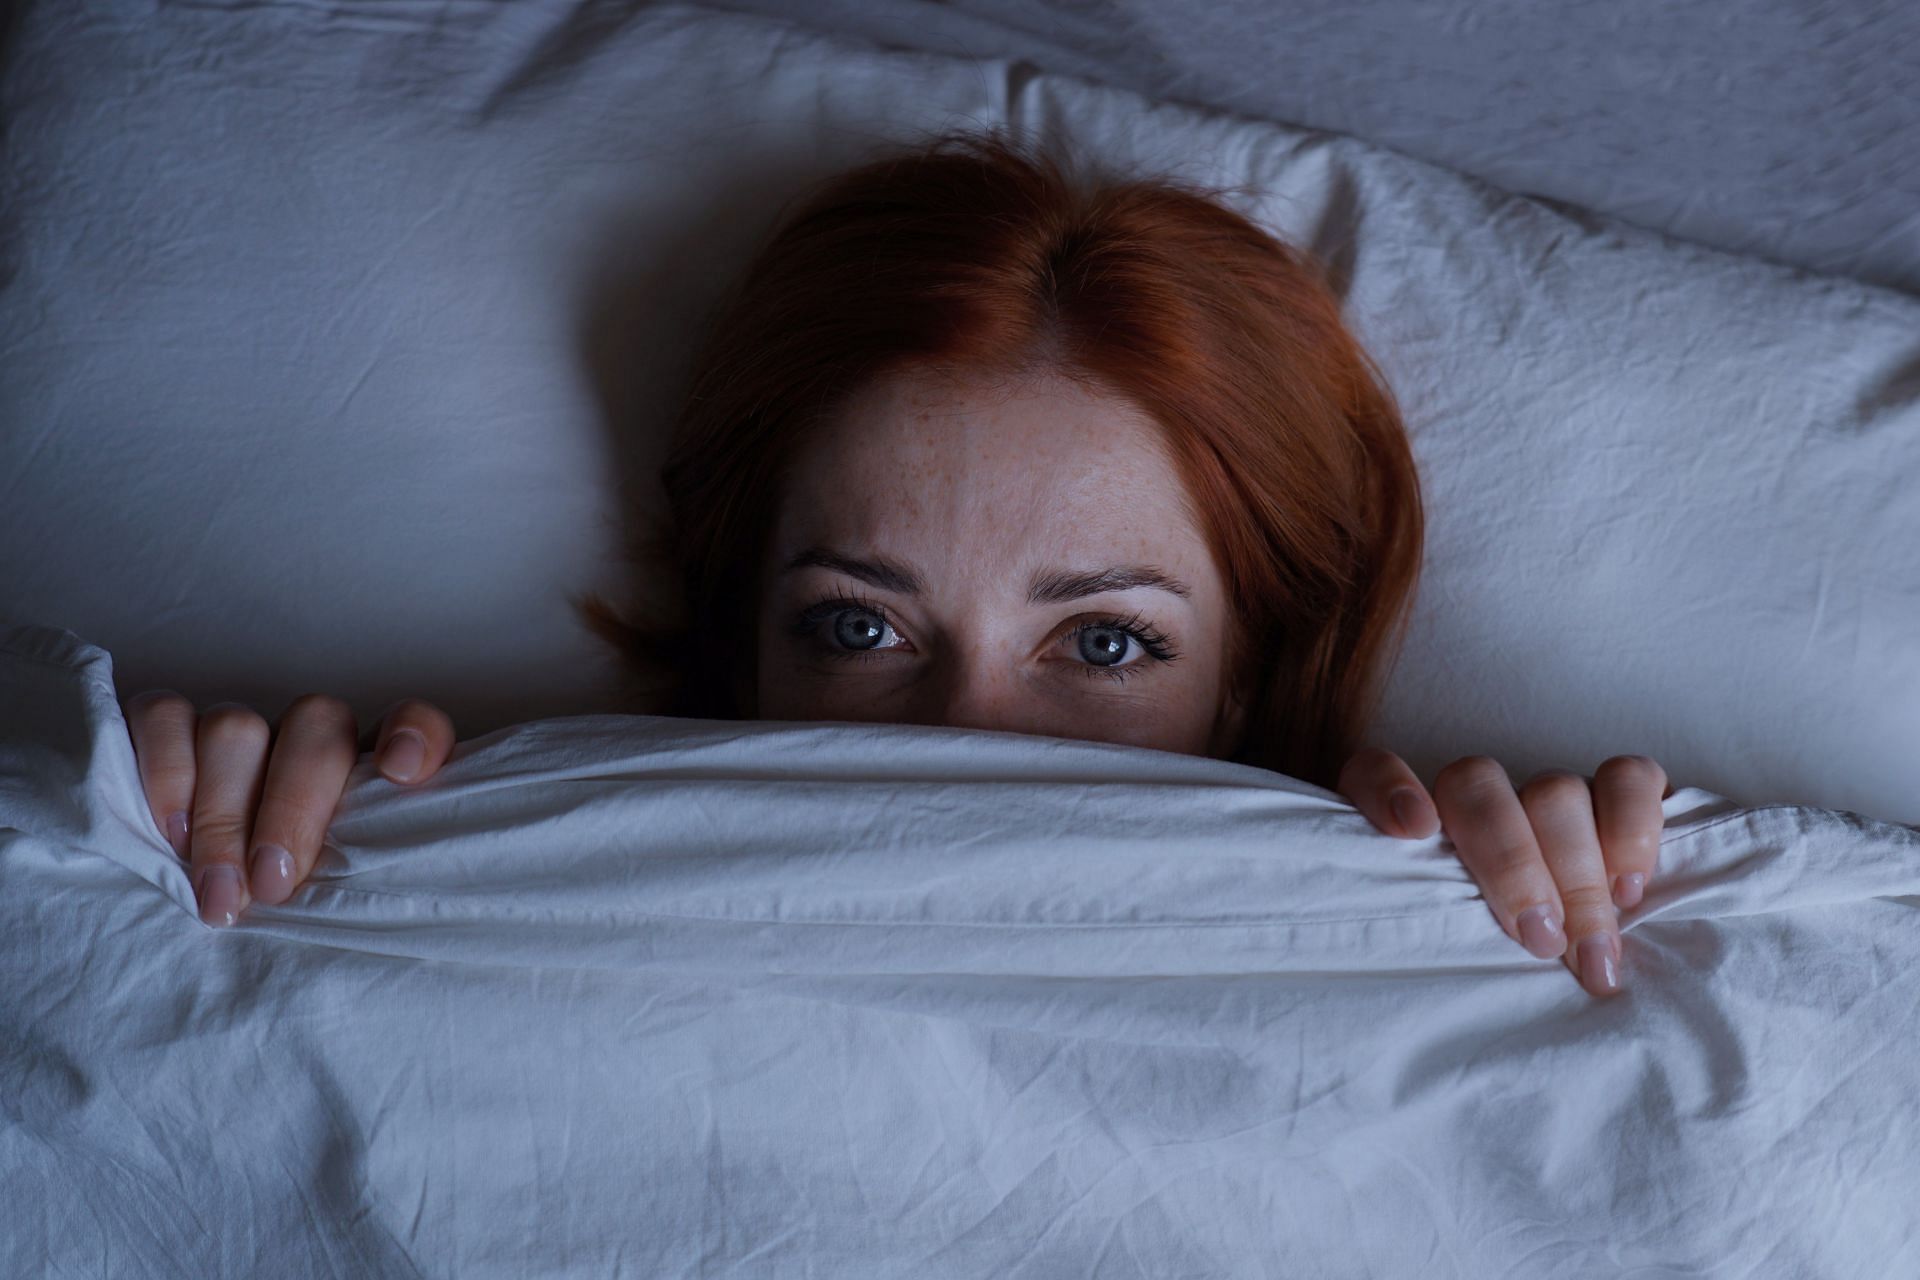 Is sleep paralysis dangerous? have you experienced it? (Image via Vecteezy/ Axel Bueckert)